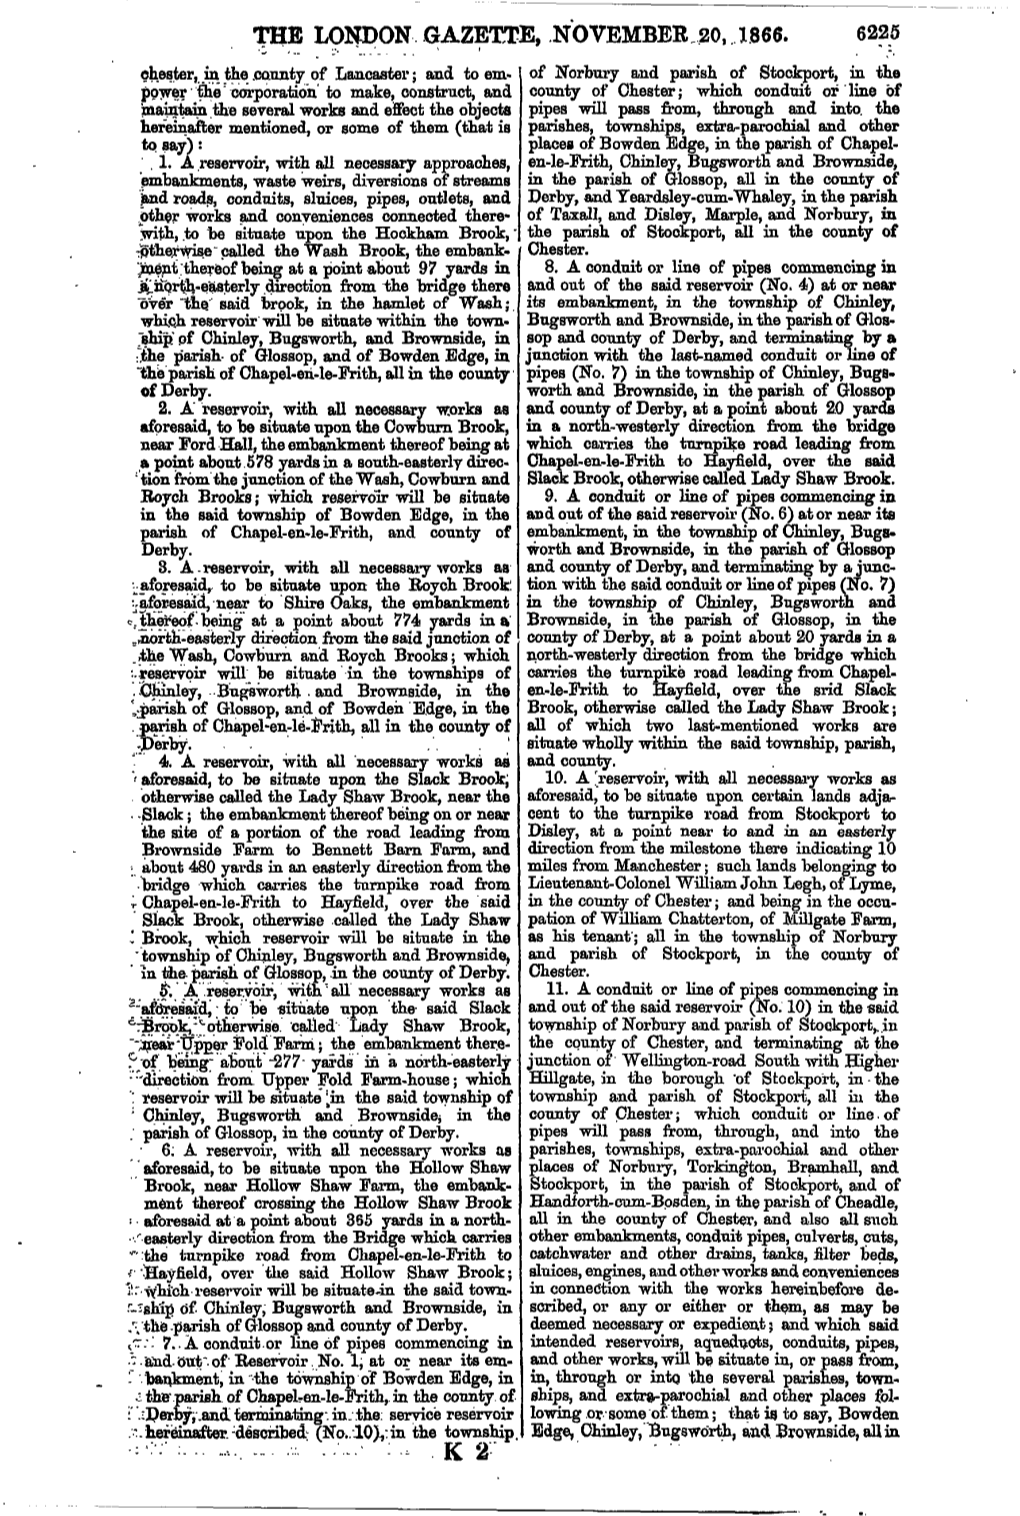 The London Gazette, November, 20, 1866